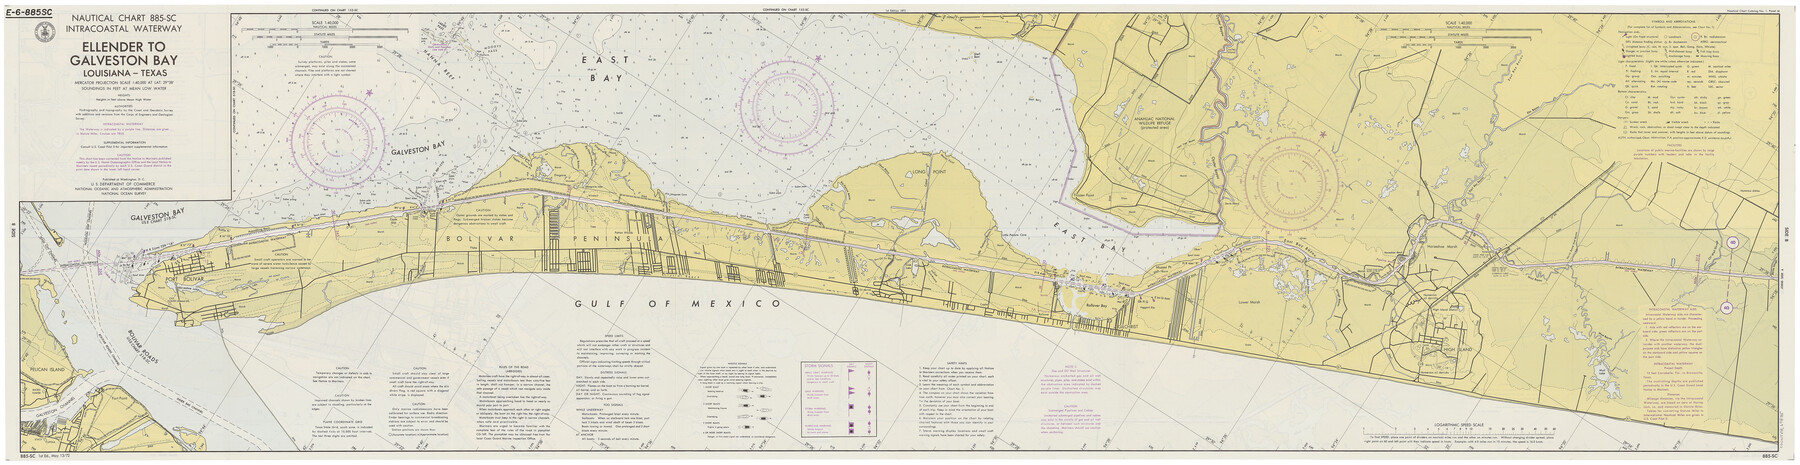 69835, Nautical Chart 885-SC Intracoastal Waterway - Ellender to Galveston Bay, Louisiana-Texas, General Map Collection